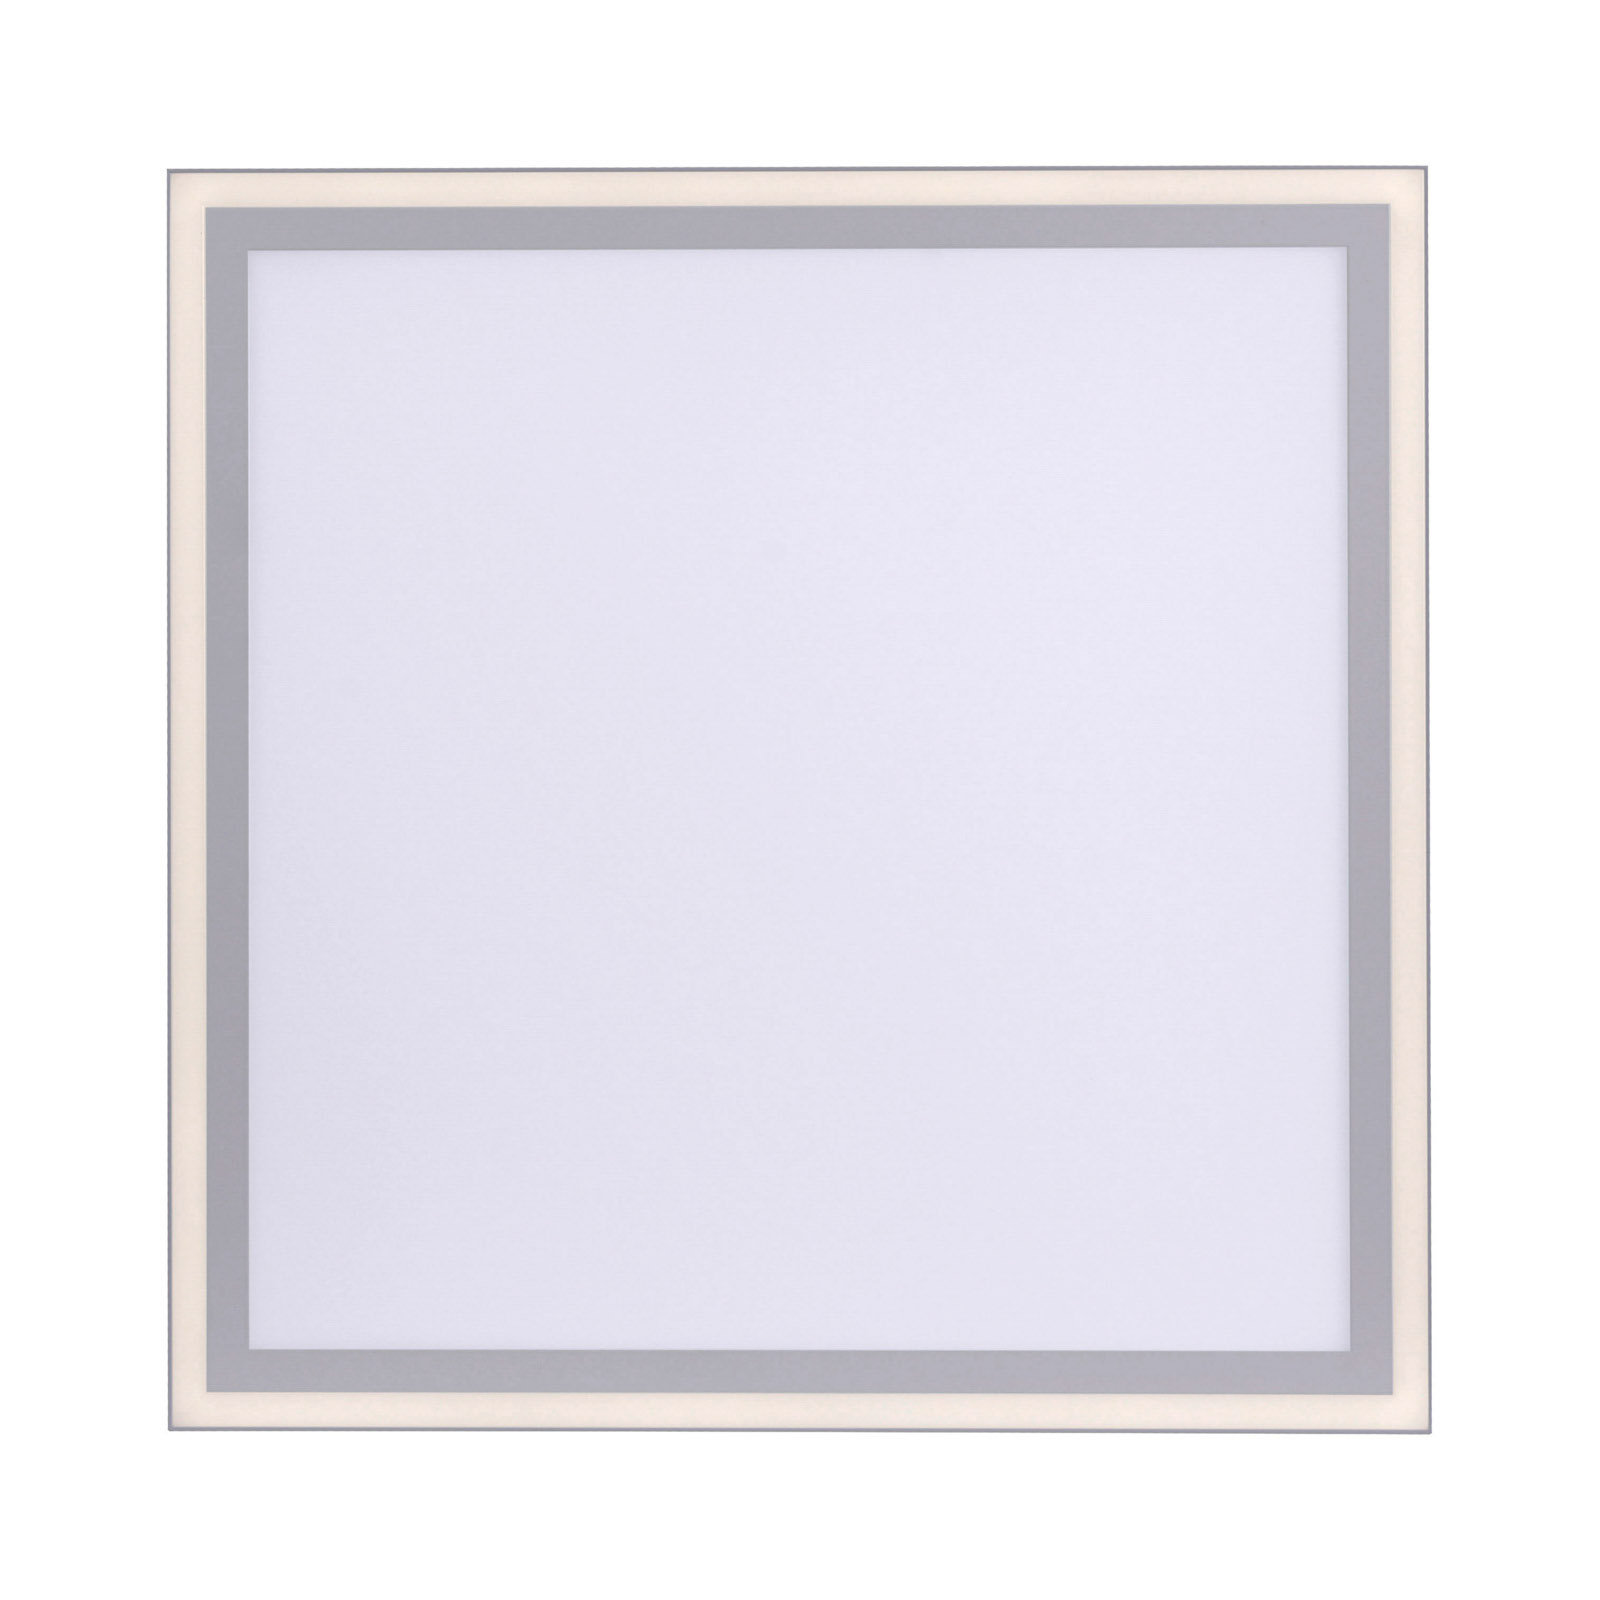 Stropné LED svetlo Edging, tunable white, 46x46 cm